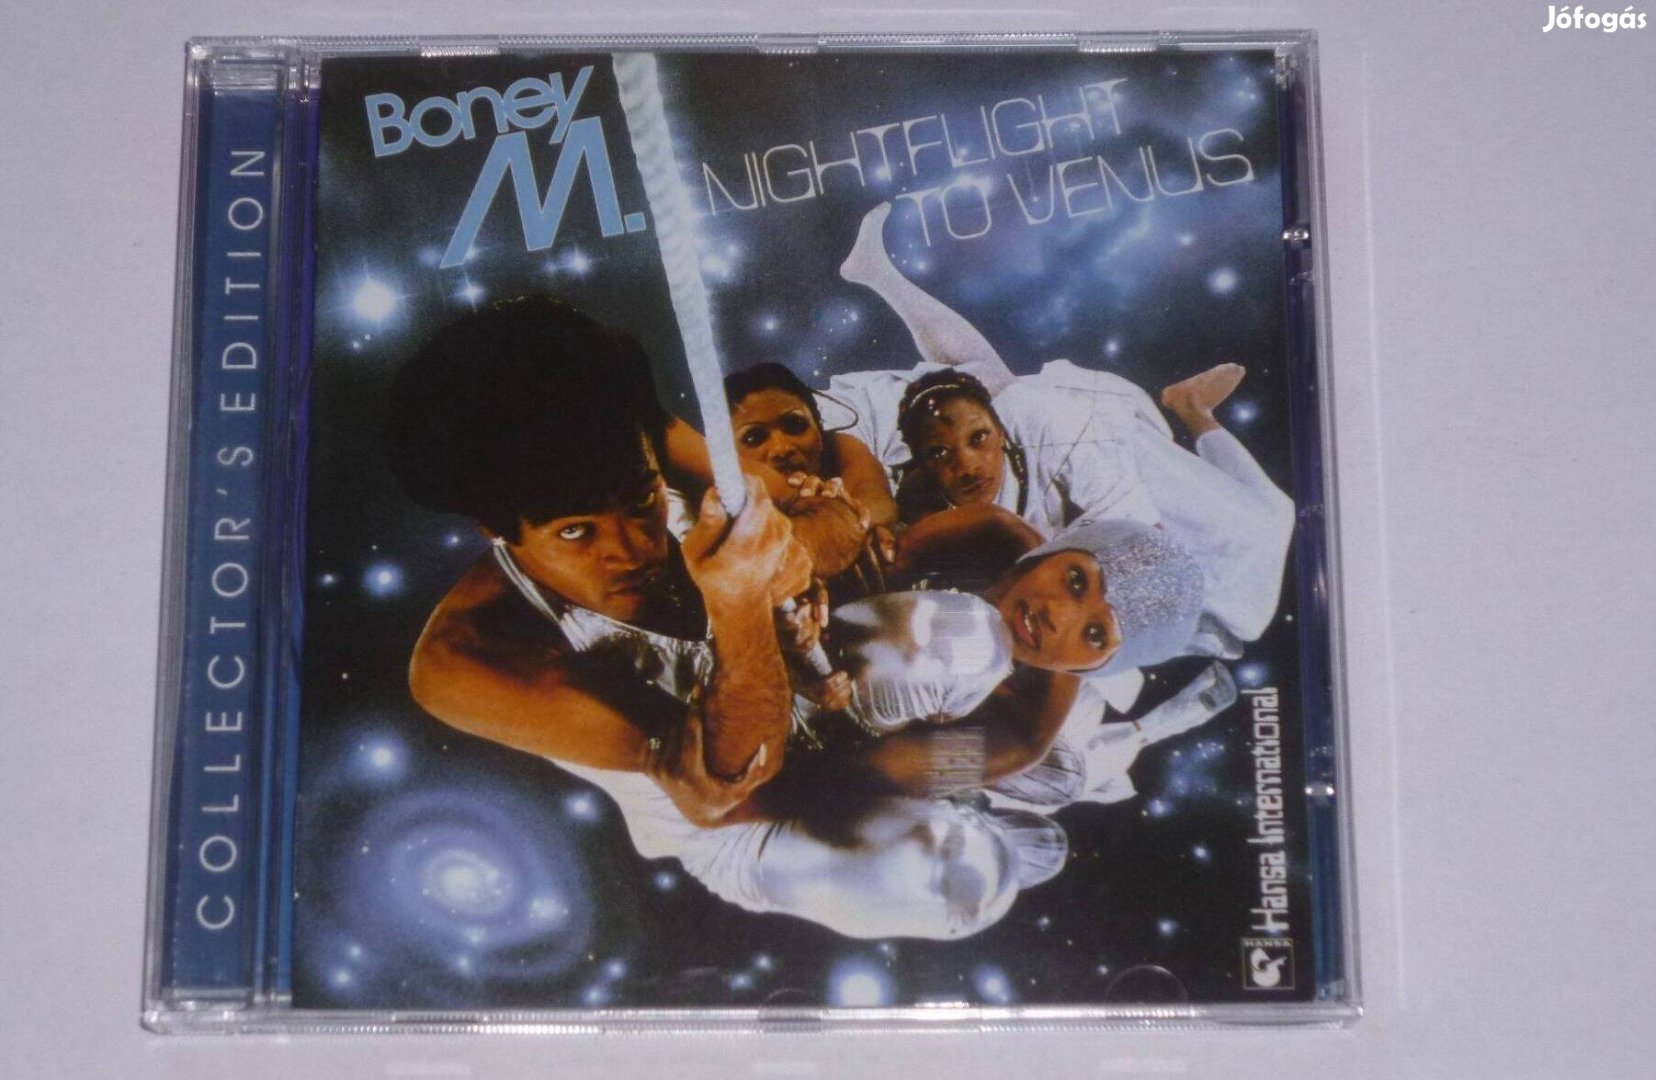 Boney M - Nightflight To Venus 1978 CD Collector's Edition